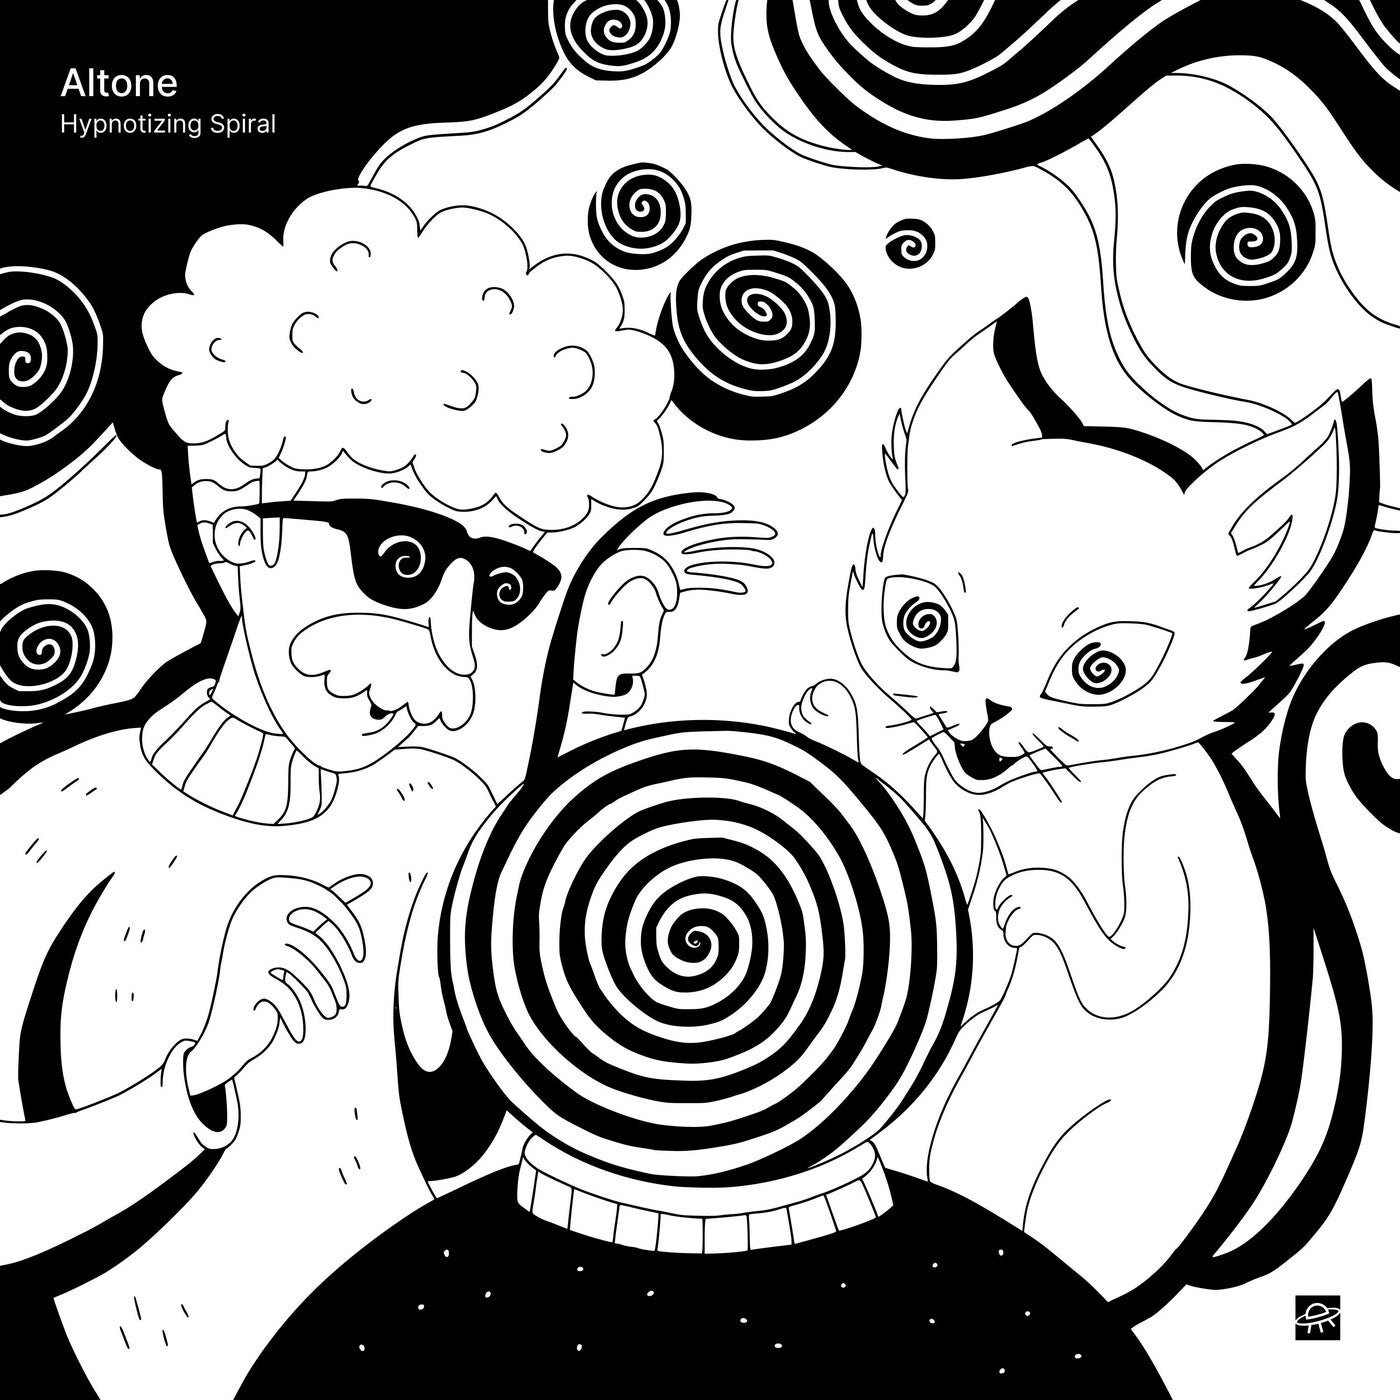 image cover: Altone - Hypnotizing Spiral / SL27